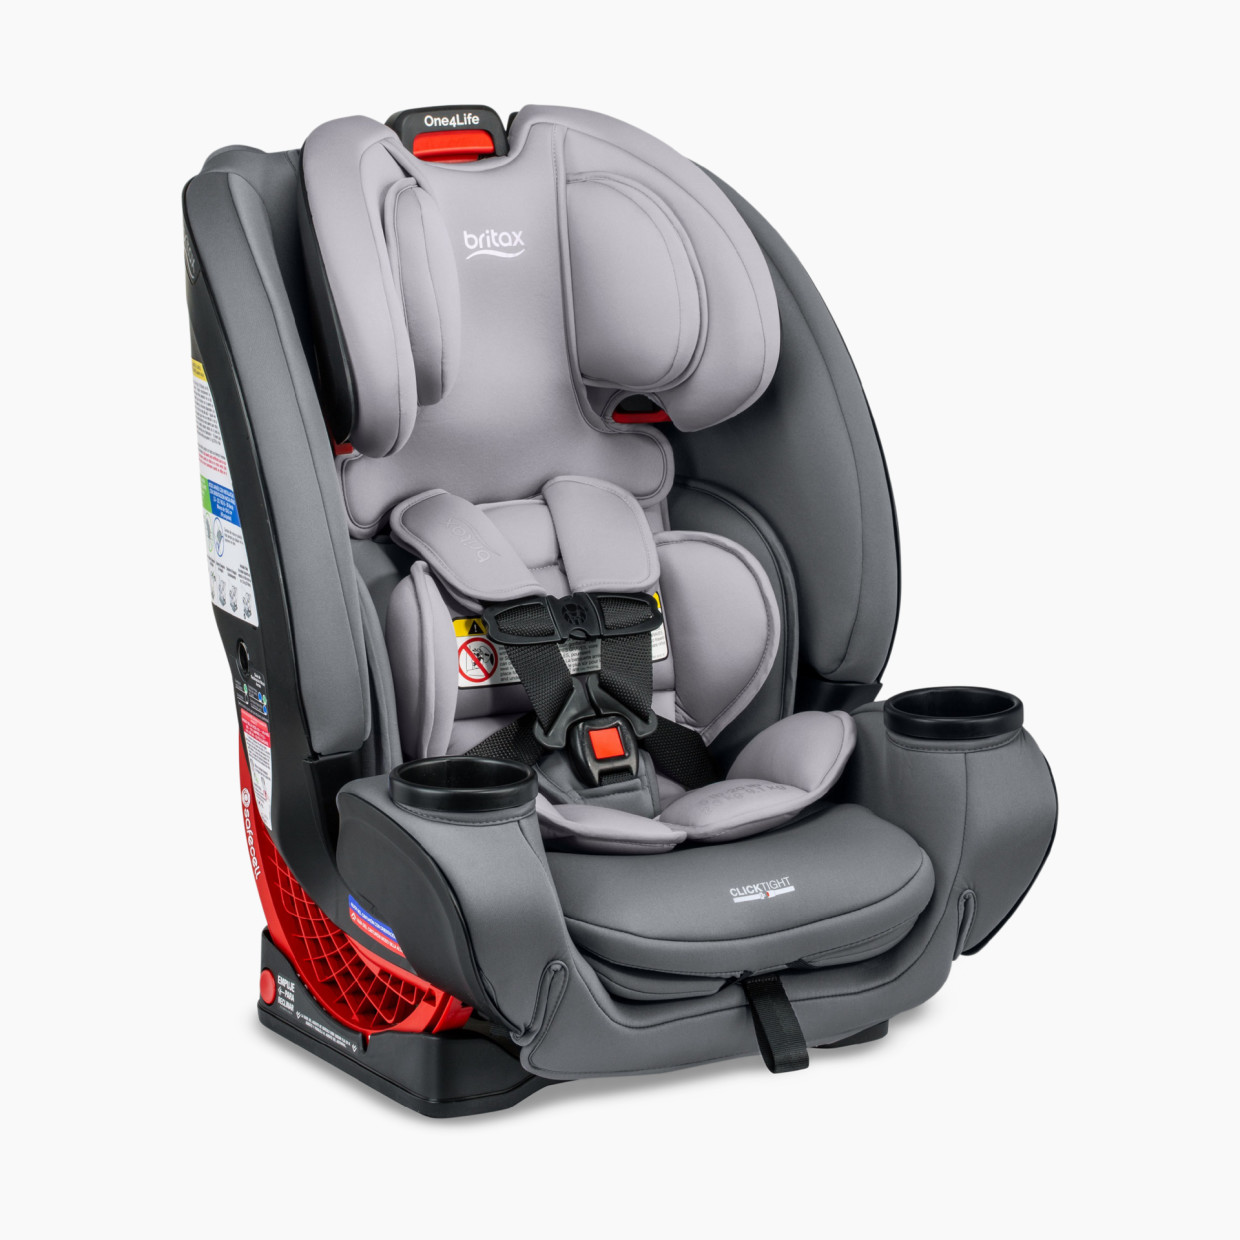 Britax One4Life ClickTight All-in-One Car Seat - Glacier Graphite.